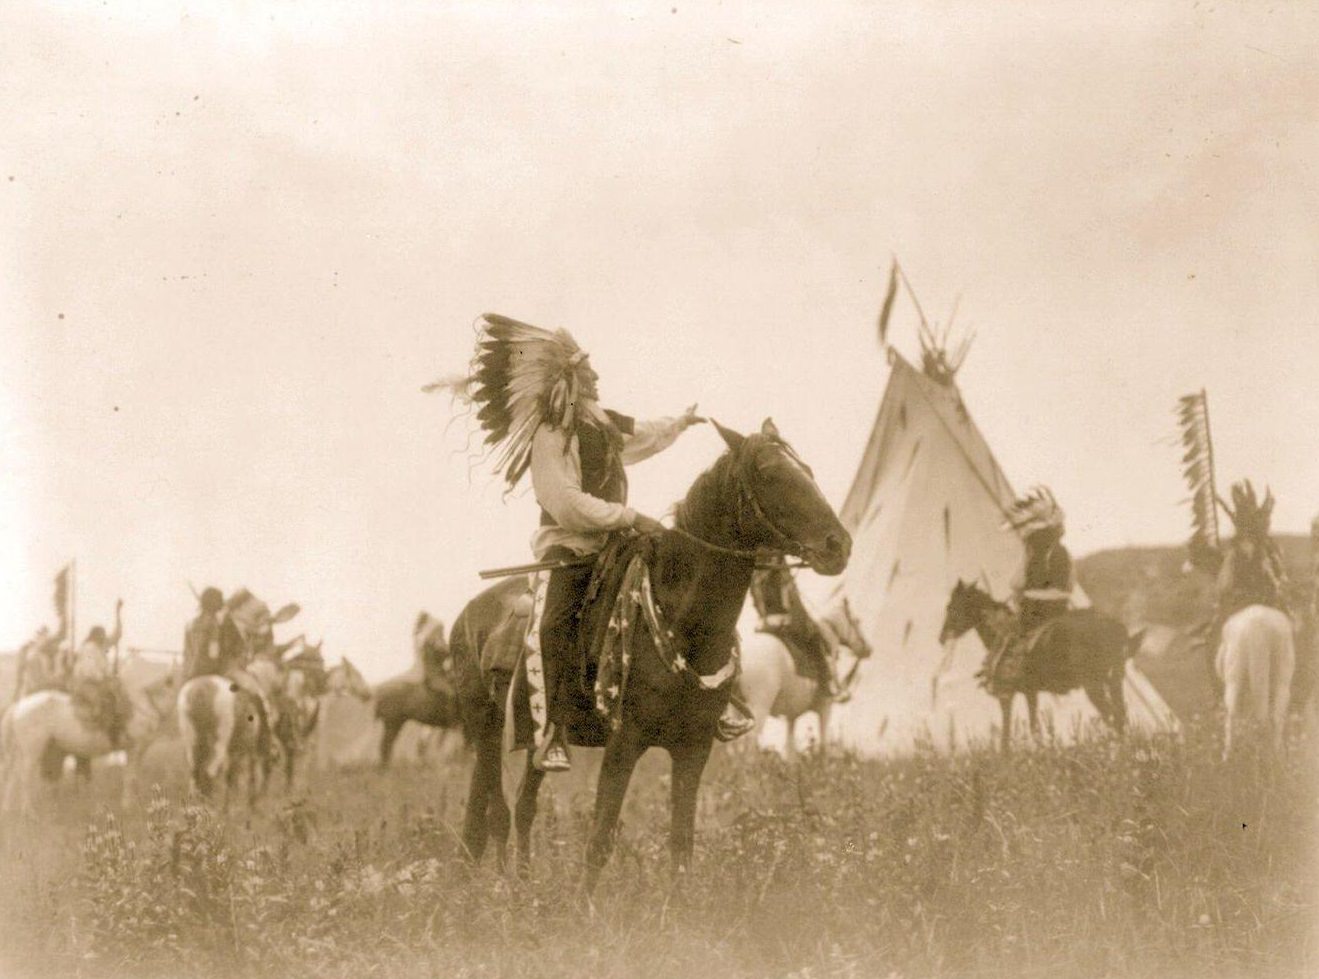 Dakota man, wearing war bonnet, sitting on horseback, his left hand outstretched toward tipi in background, others on horseback, 1970